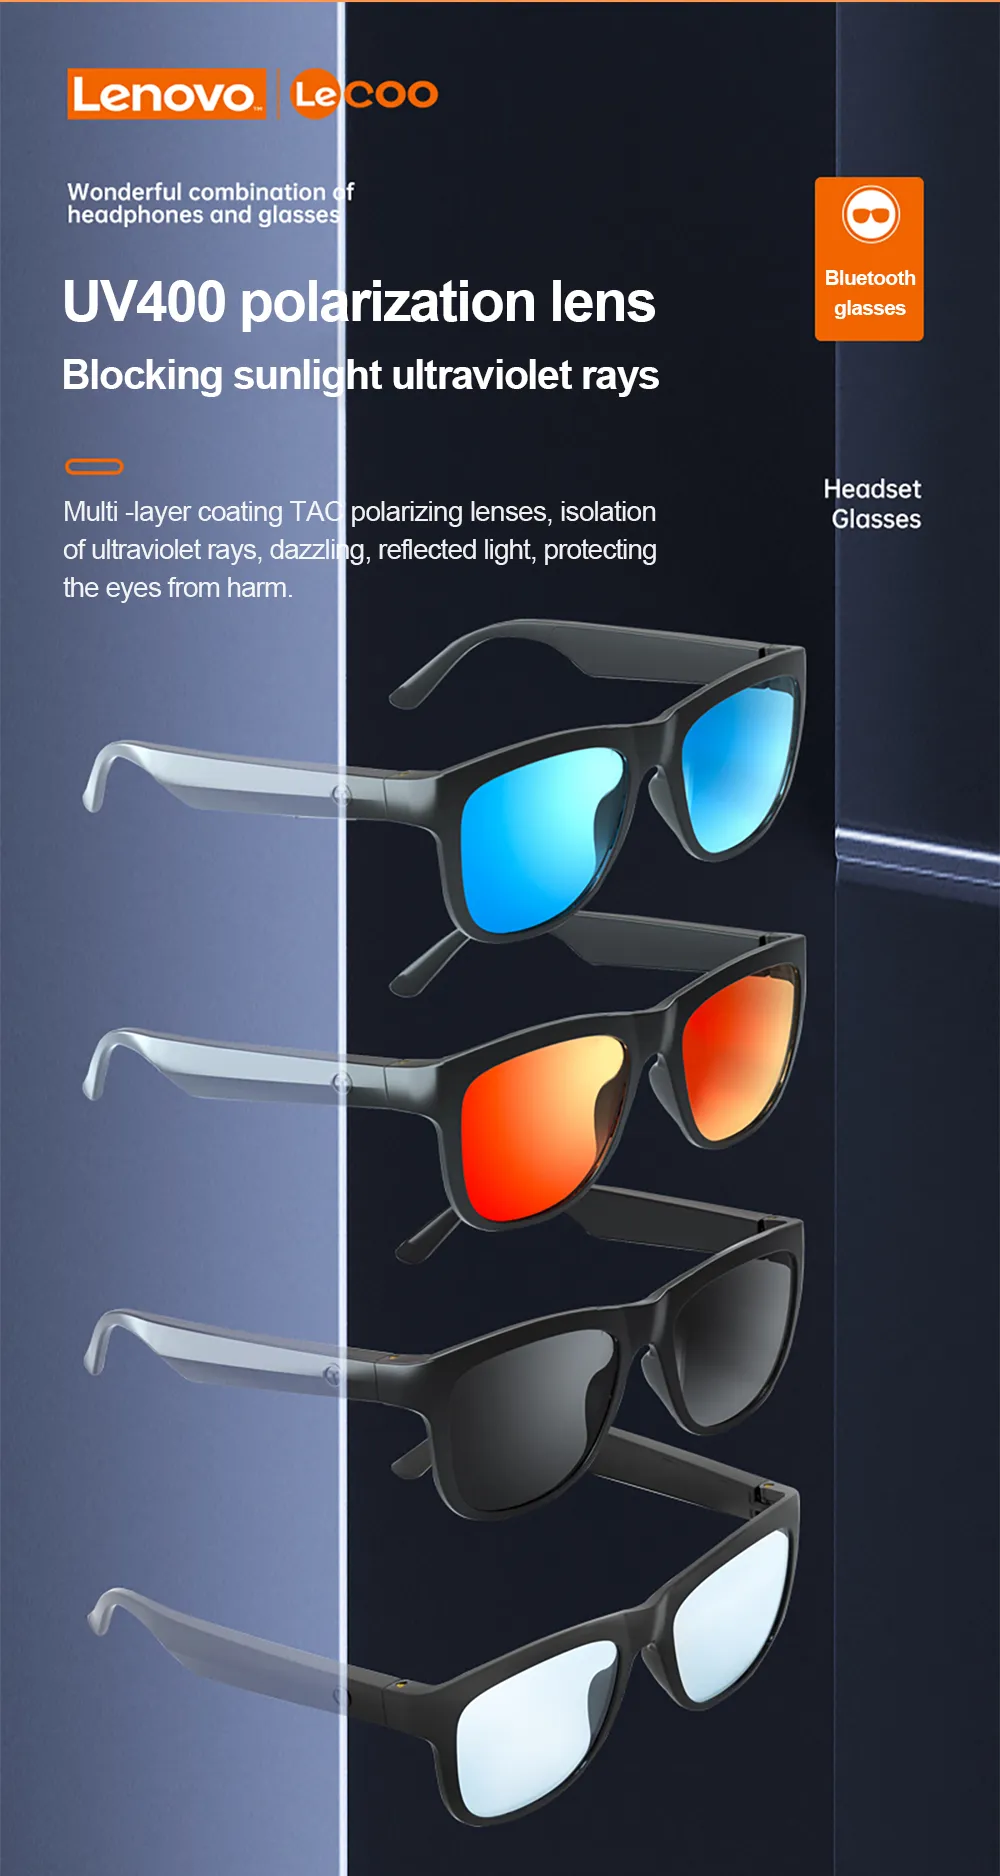 Lenovo Lecoo-gafas inteligentes con Bluetooth 5,0, auriculares inalámbricos para deportes al aire libre, llamadas, música, antiazul